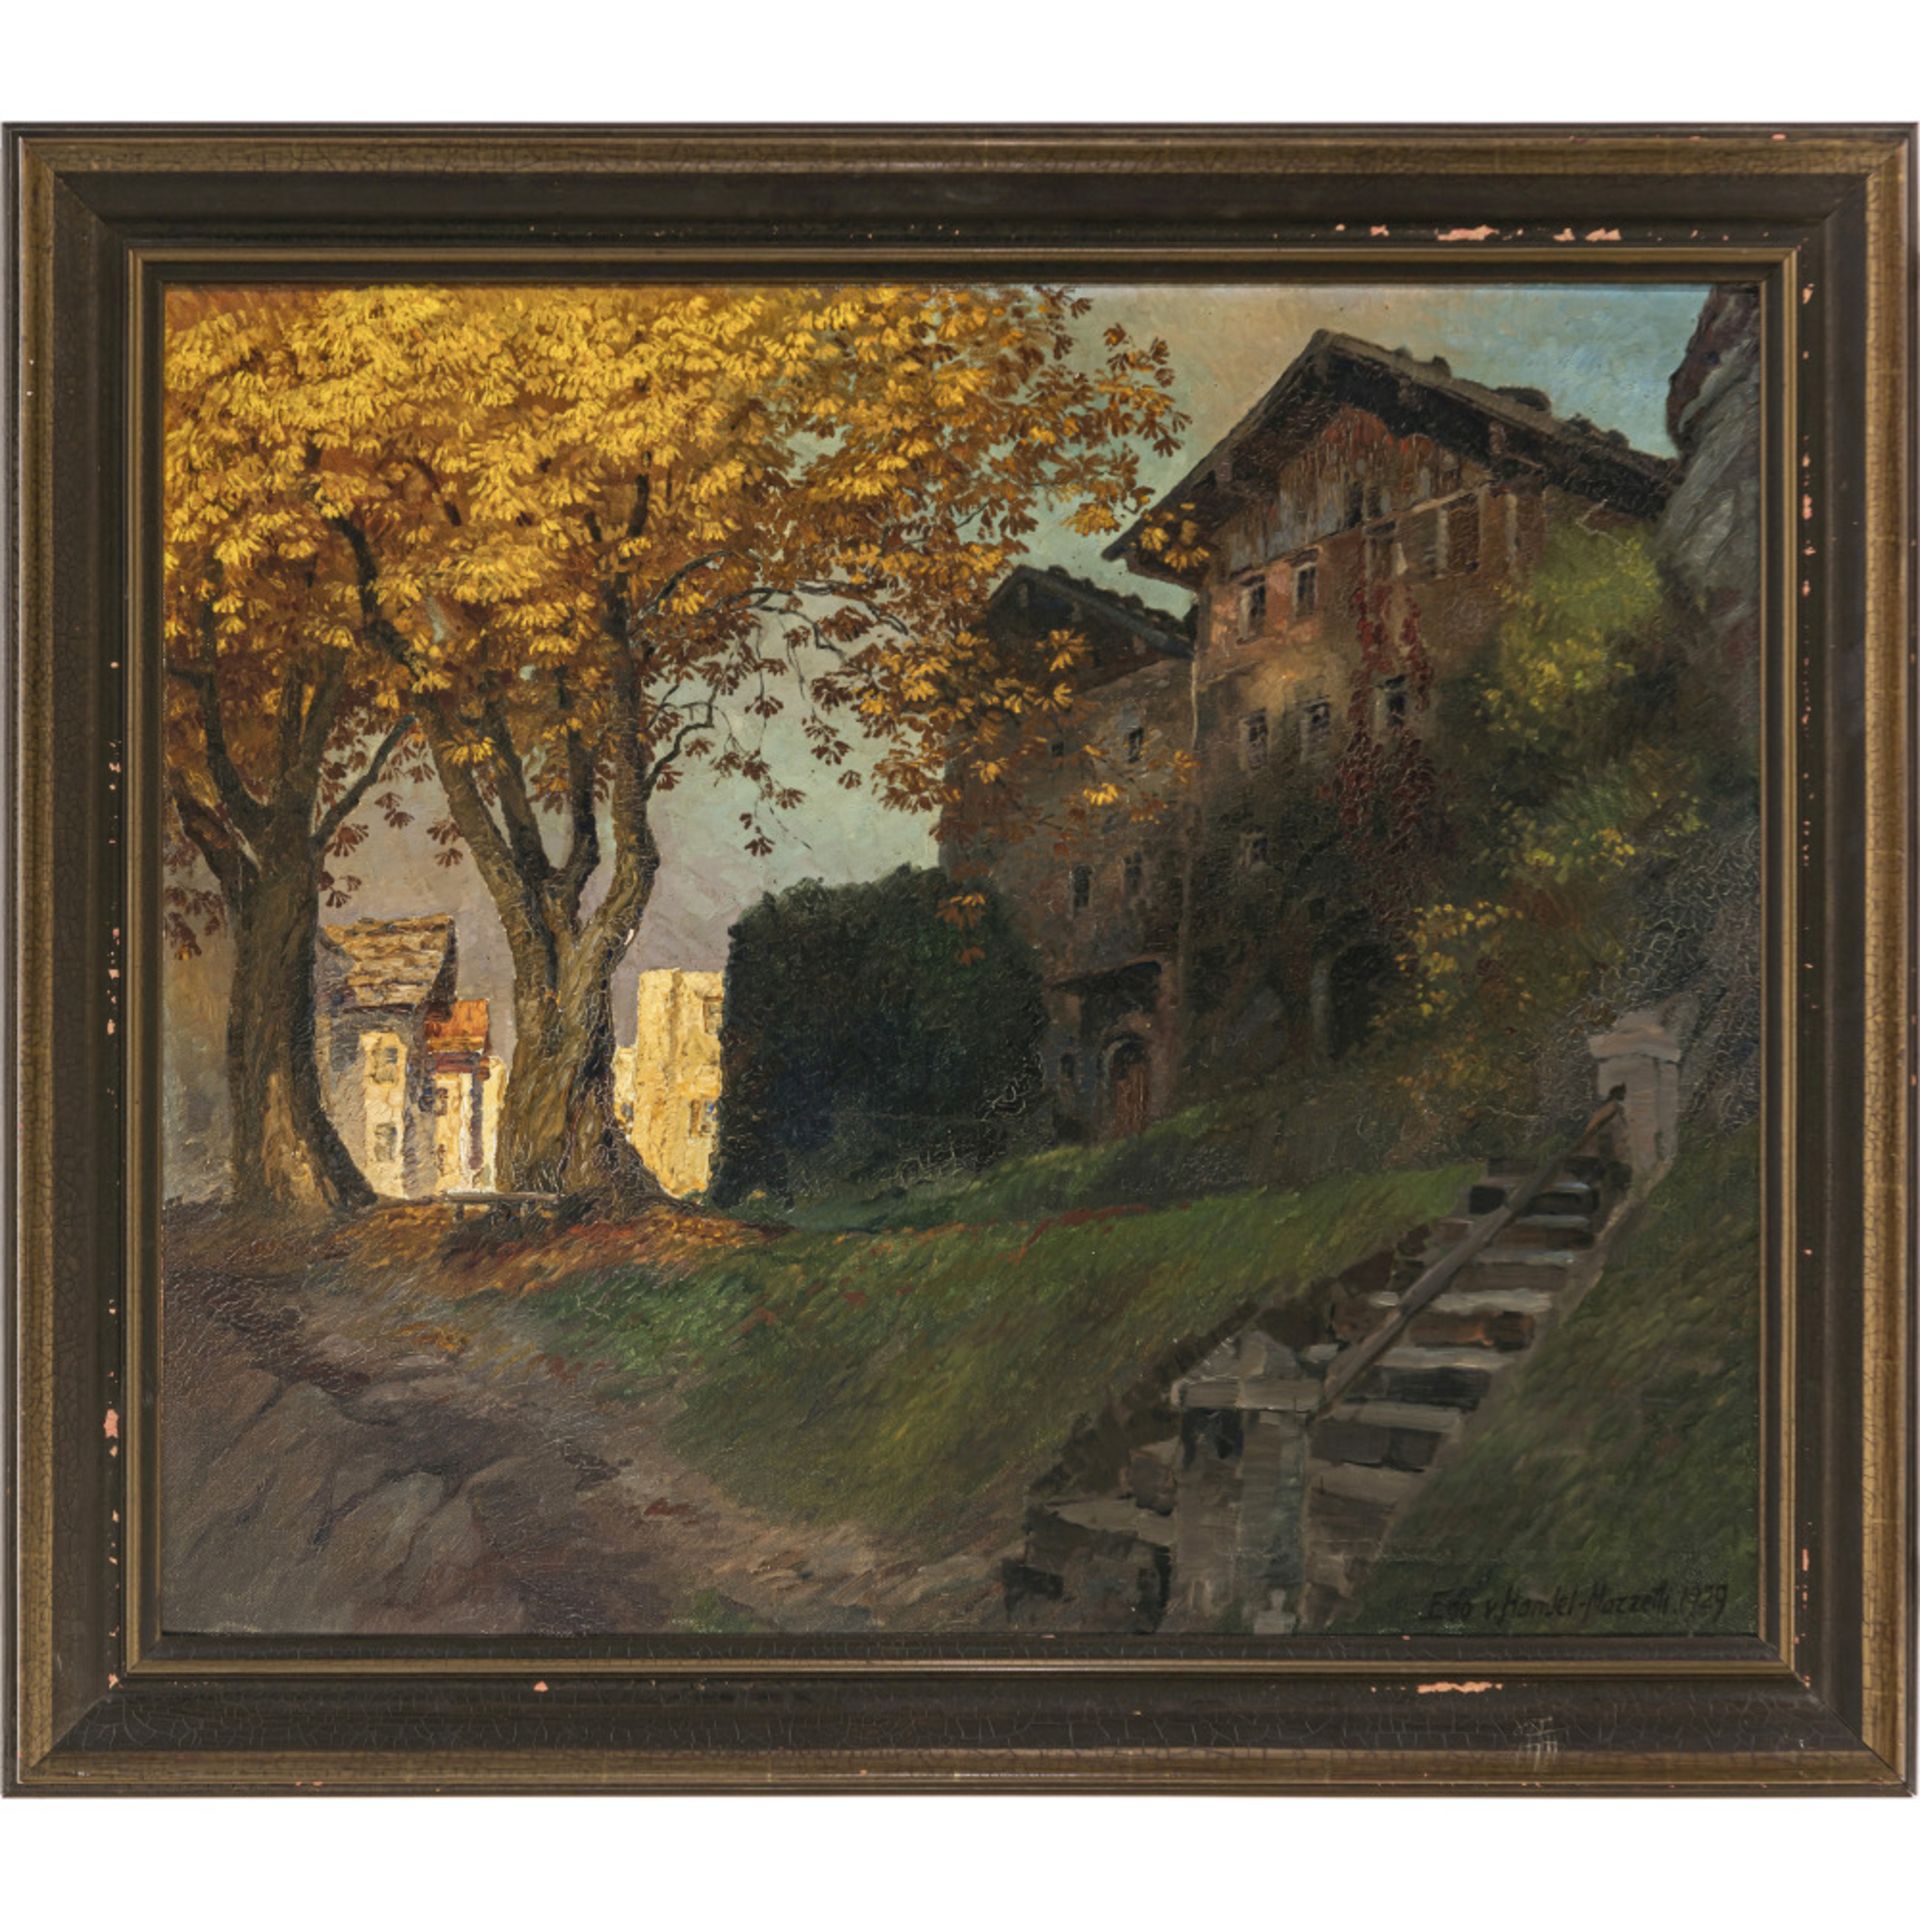 Eduard von Handel-Mazzetti - Houses in autumn landscape